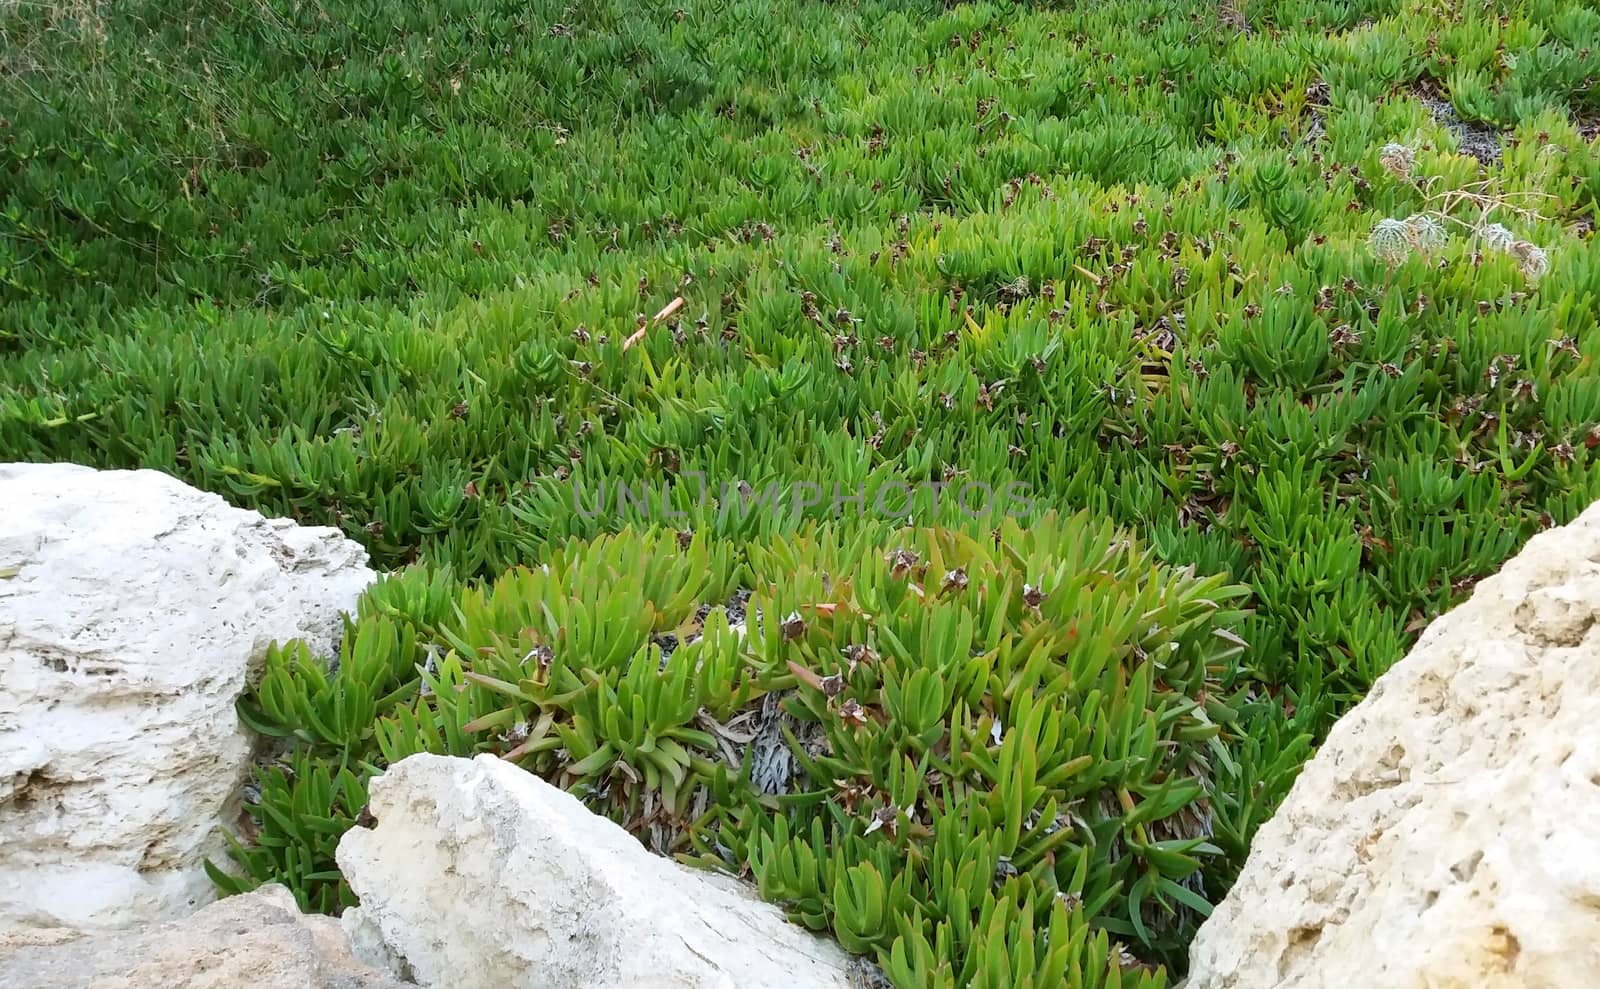 Carpet of plants, Carpobrotus Edulis growing on the rocks by Mindru